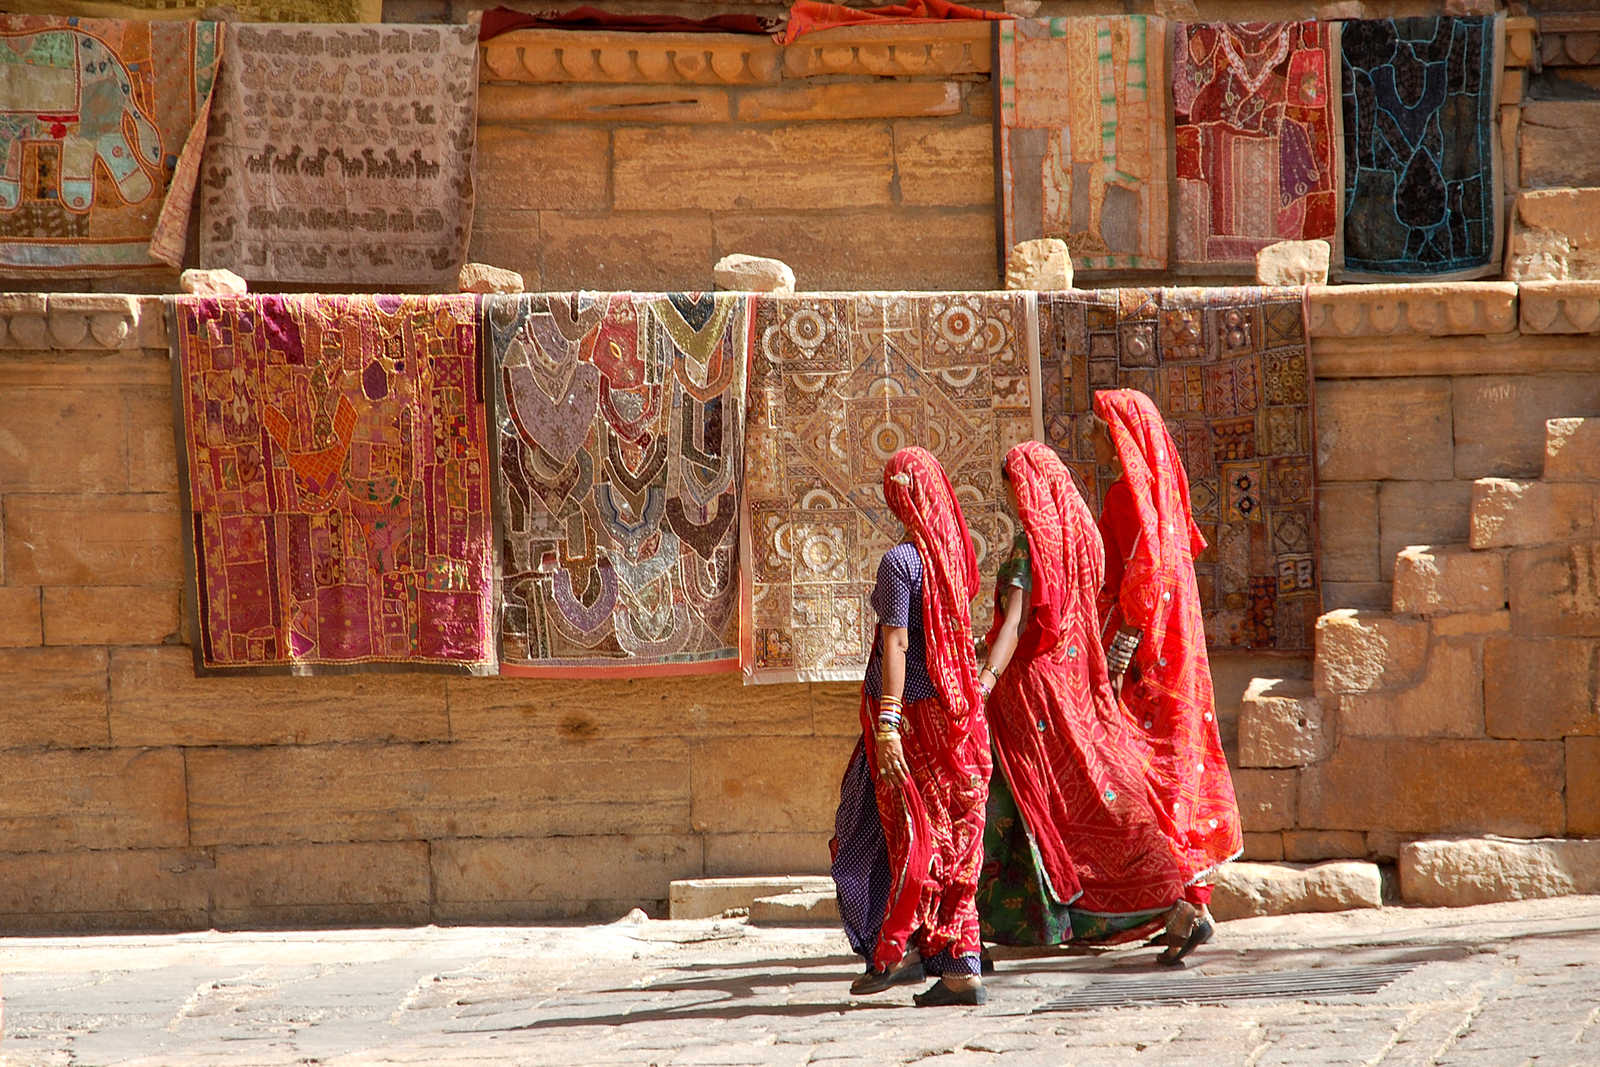 Image Rajasthan, désert du Thar et palais des maharadjahs